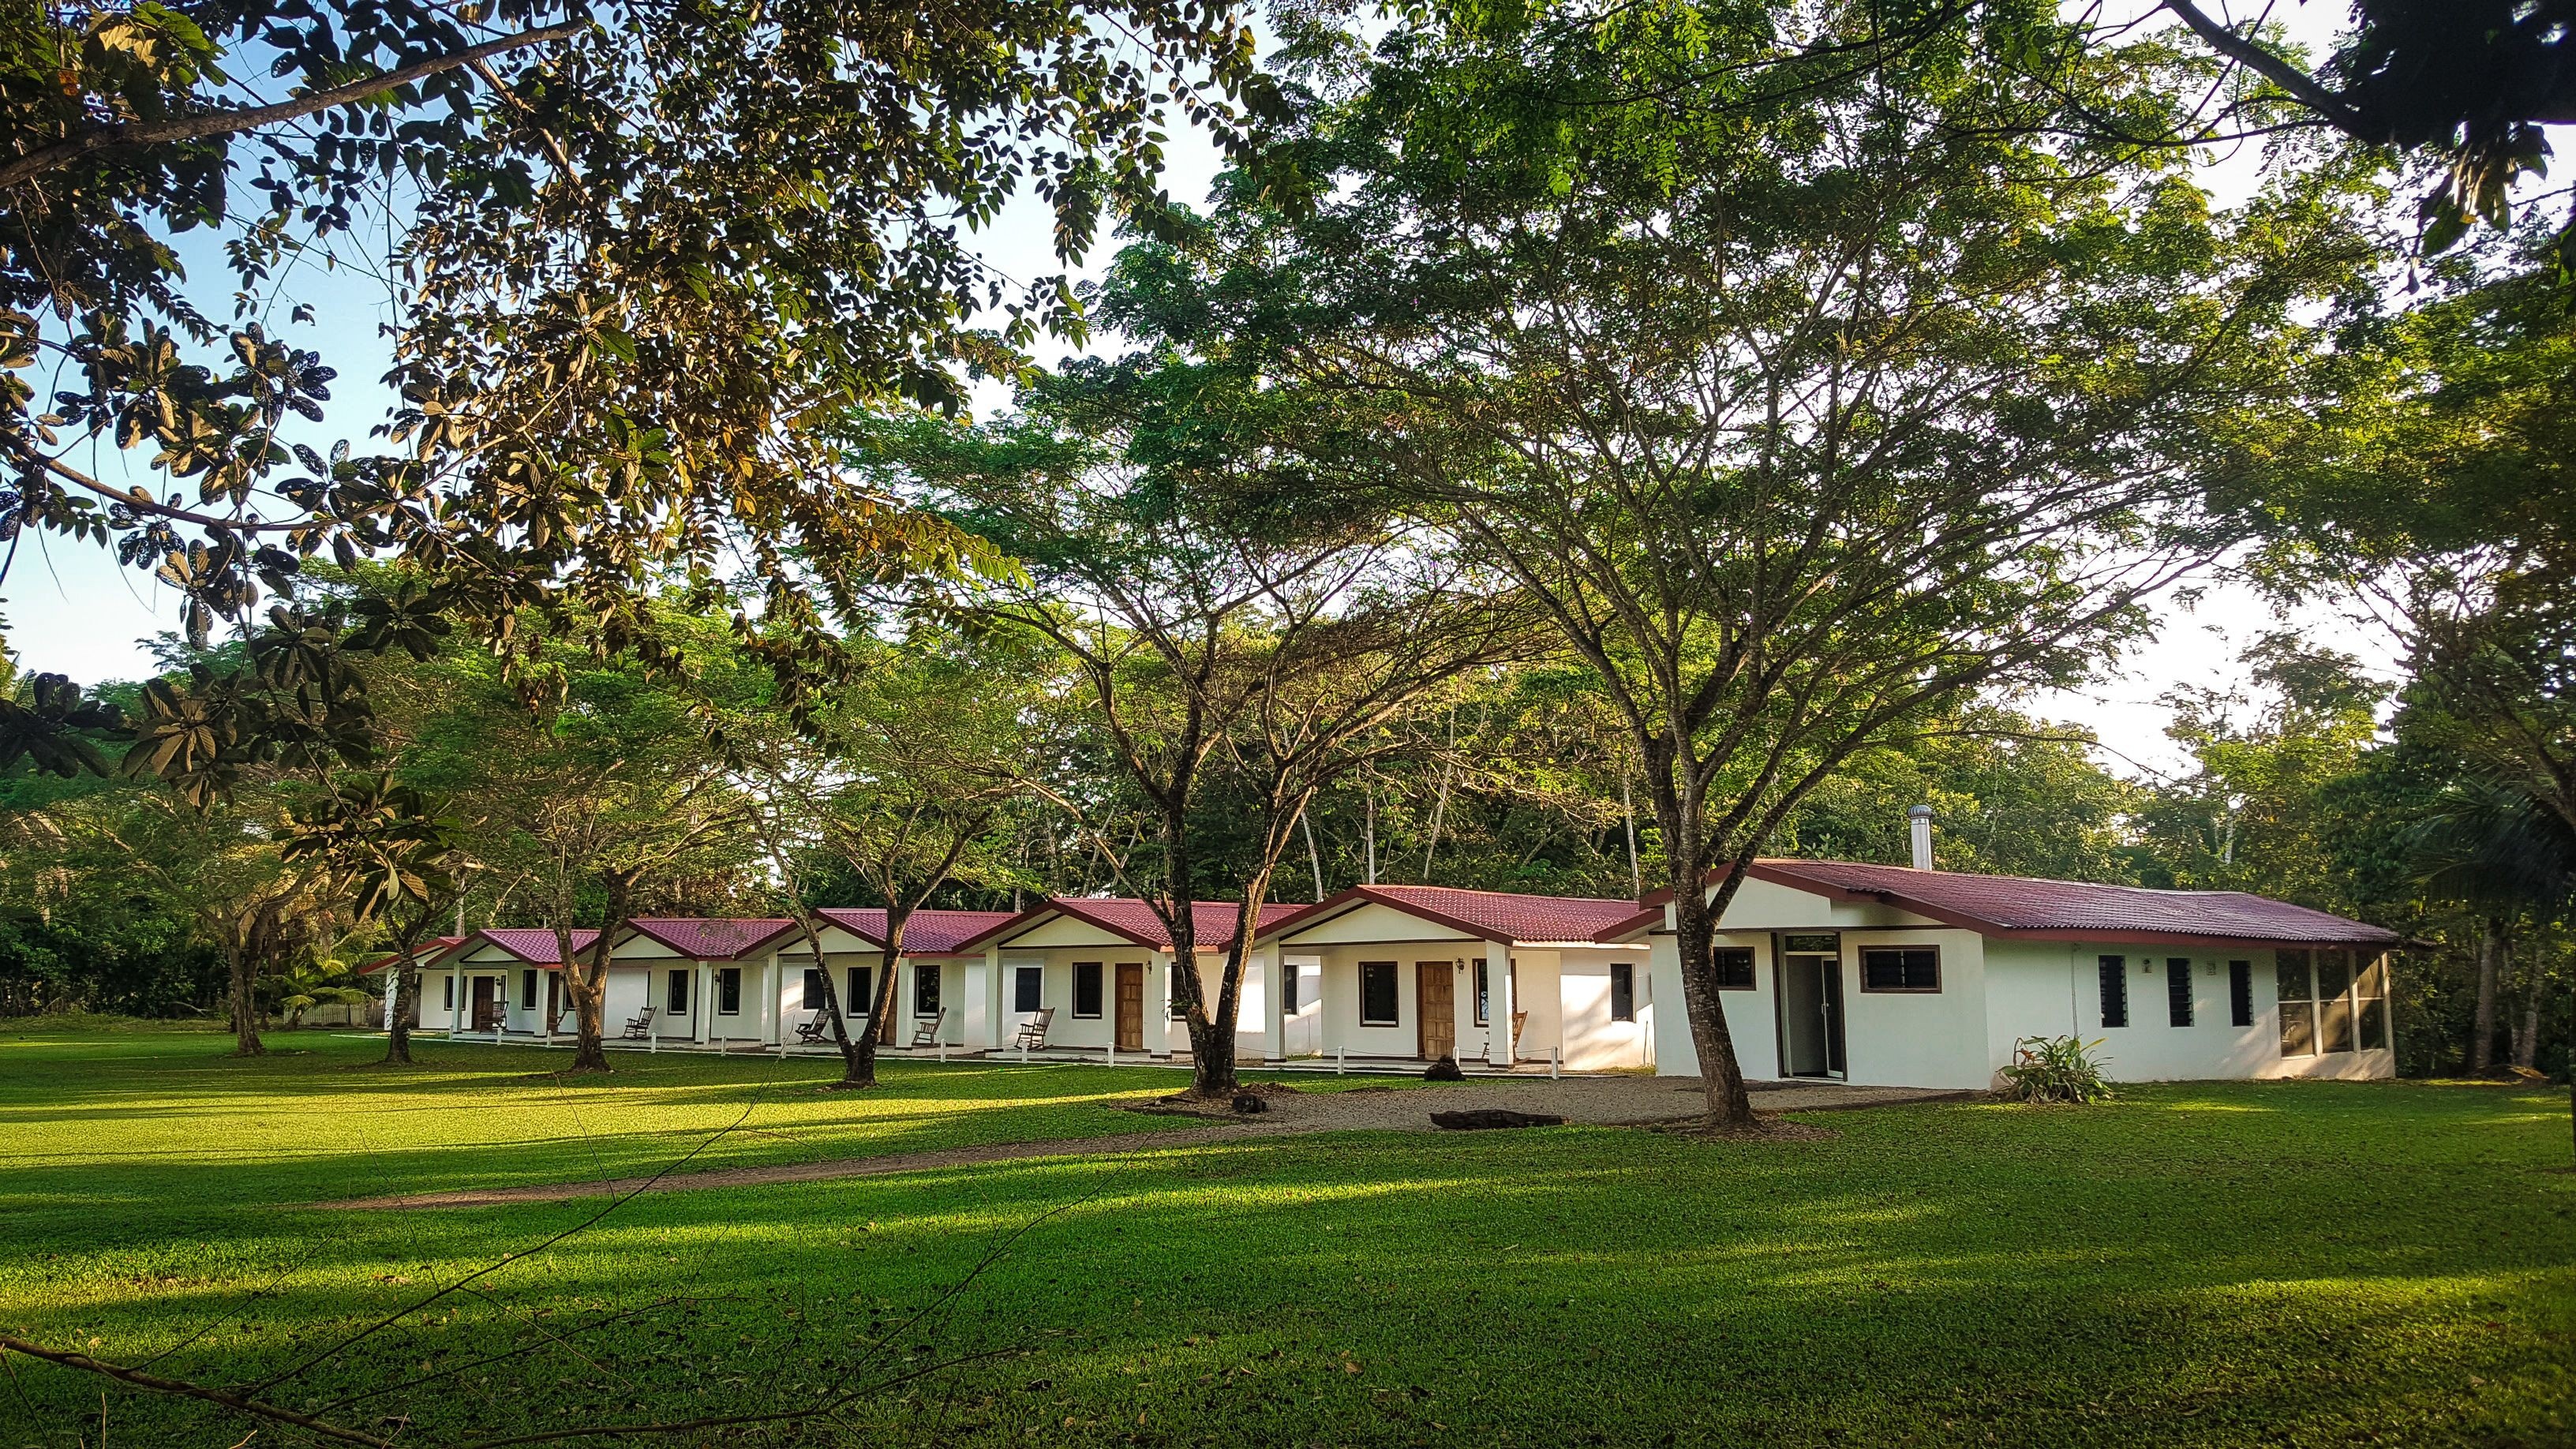 Belmopan accommodations, Belize's capital, Where to stay, Travel guide, 3270x1840 HD Desktop